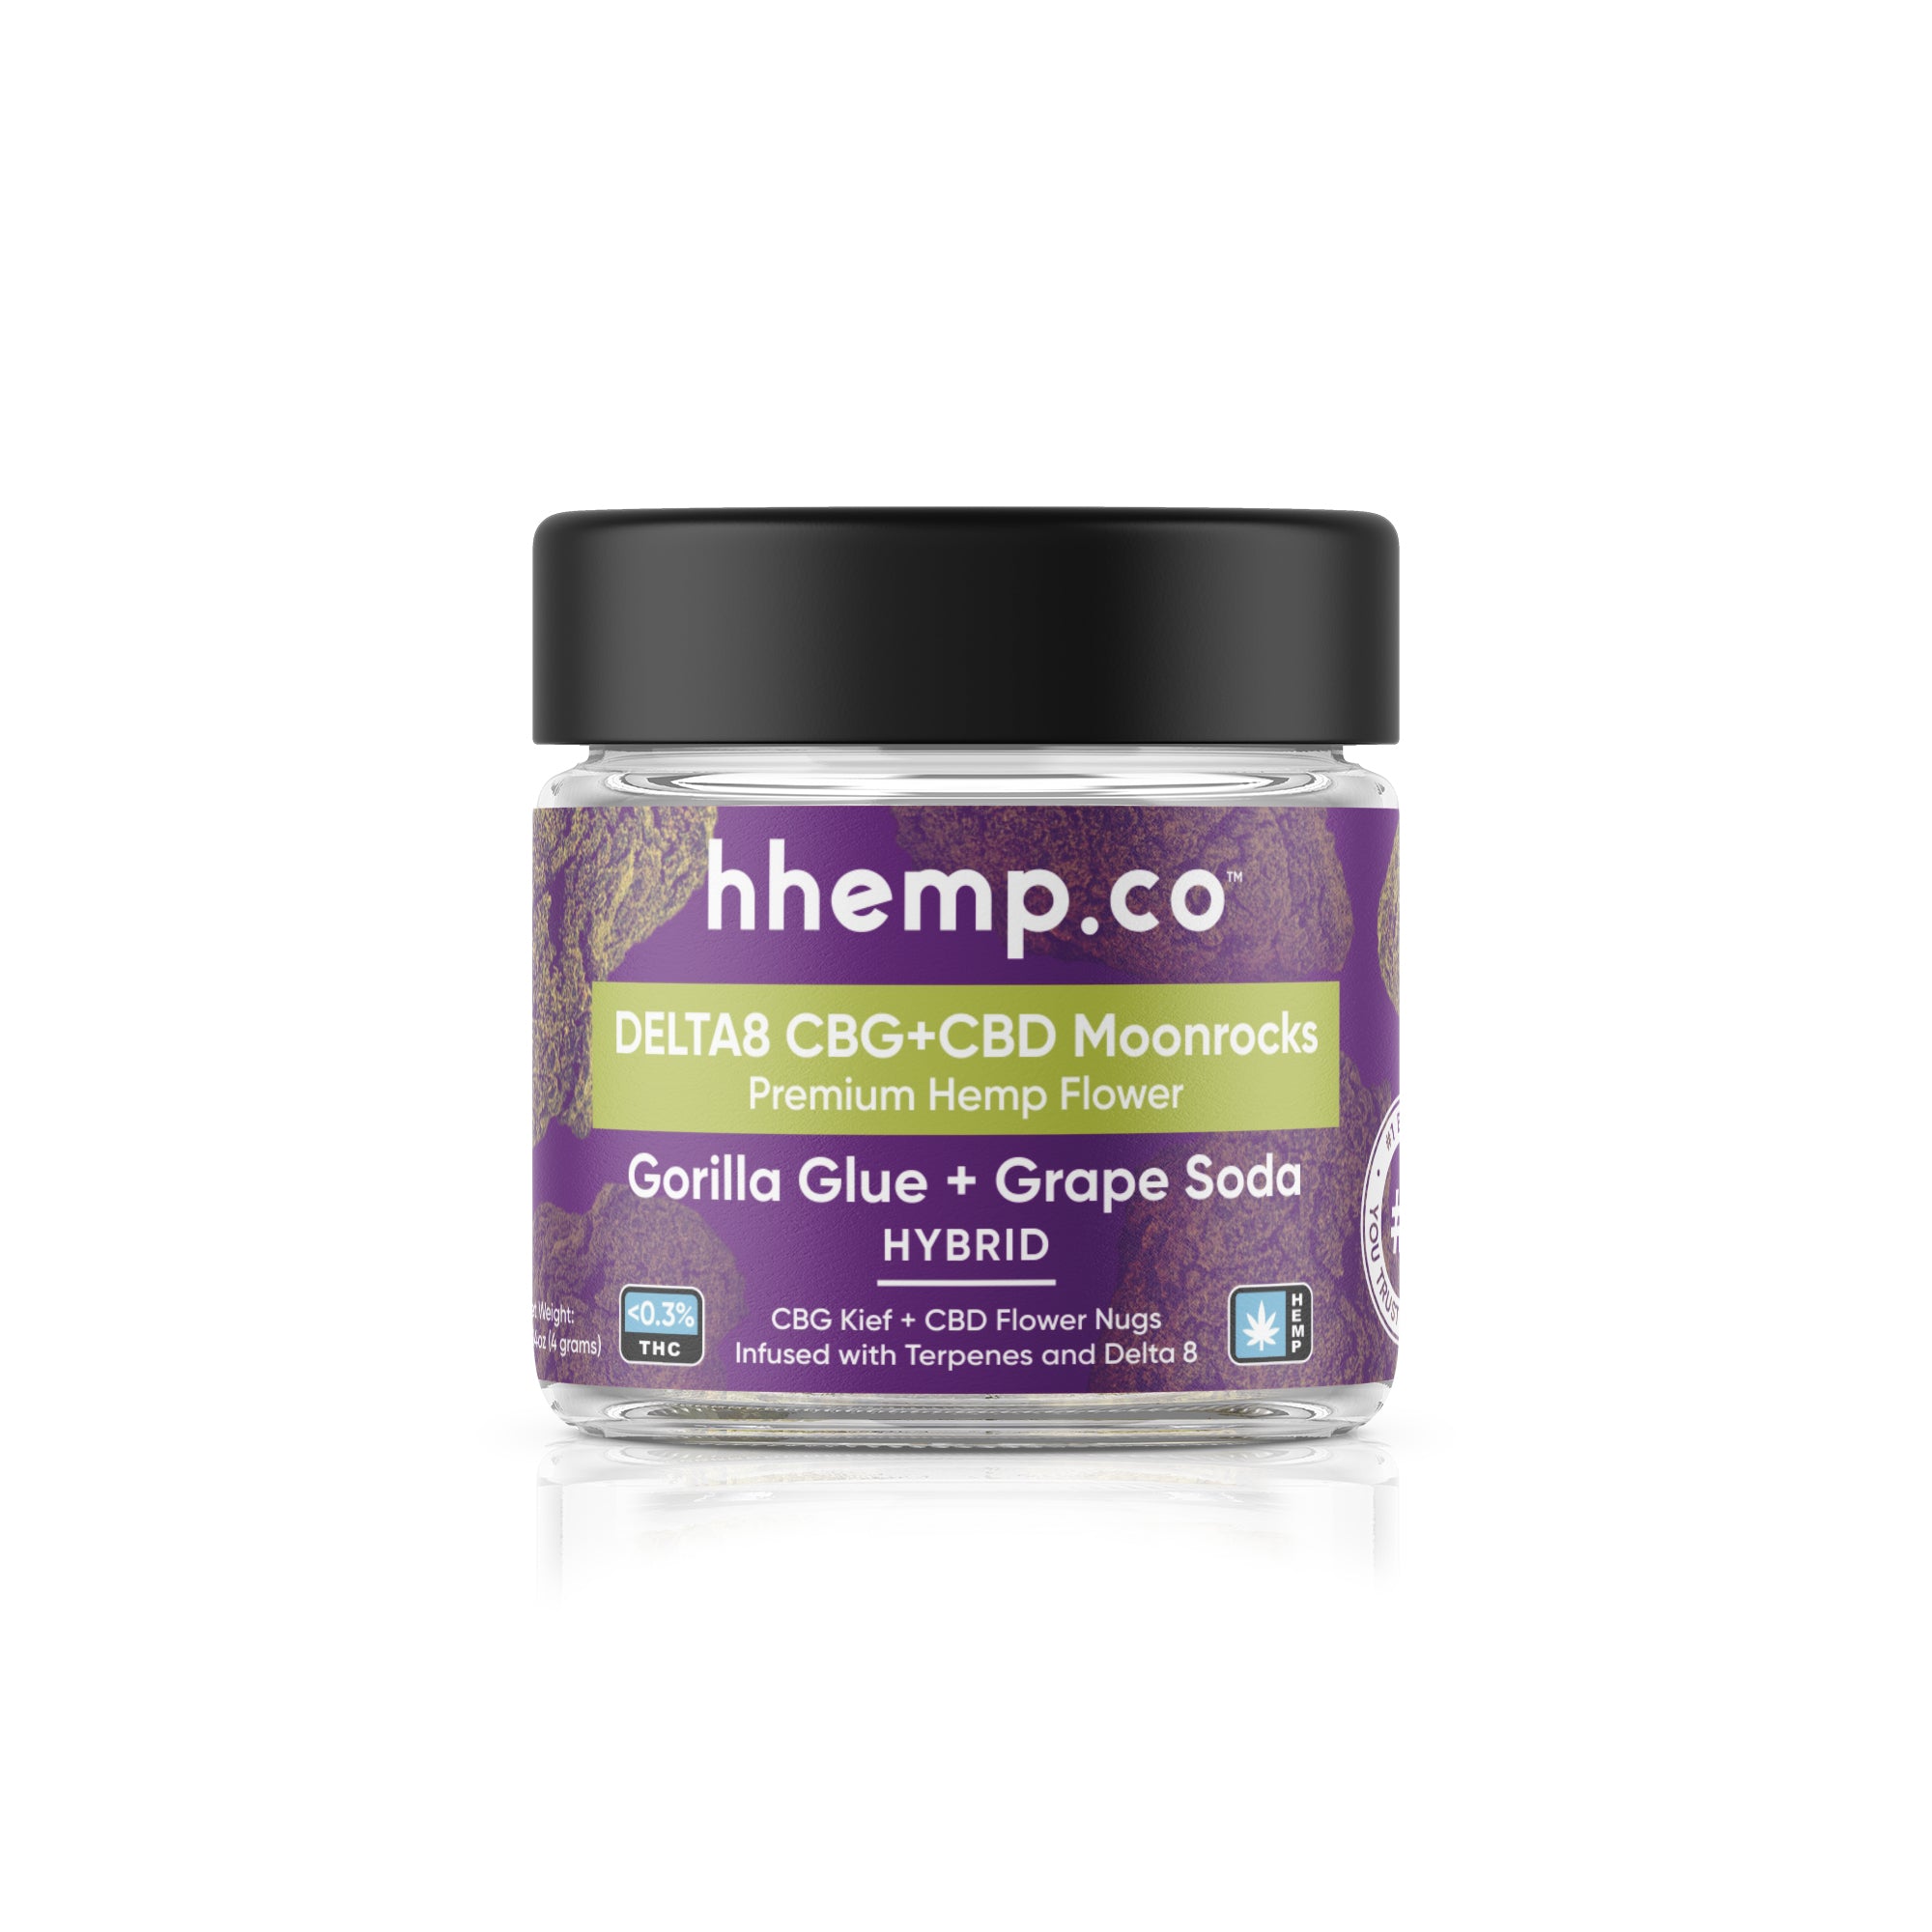 hhemp.co Delta 8 CBG + CBD Moonrock Flower Jar - Gorilla Glue + Grape Soda (Hybrid)